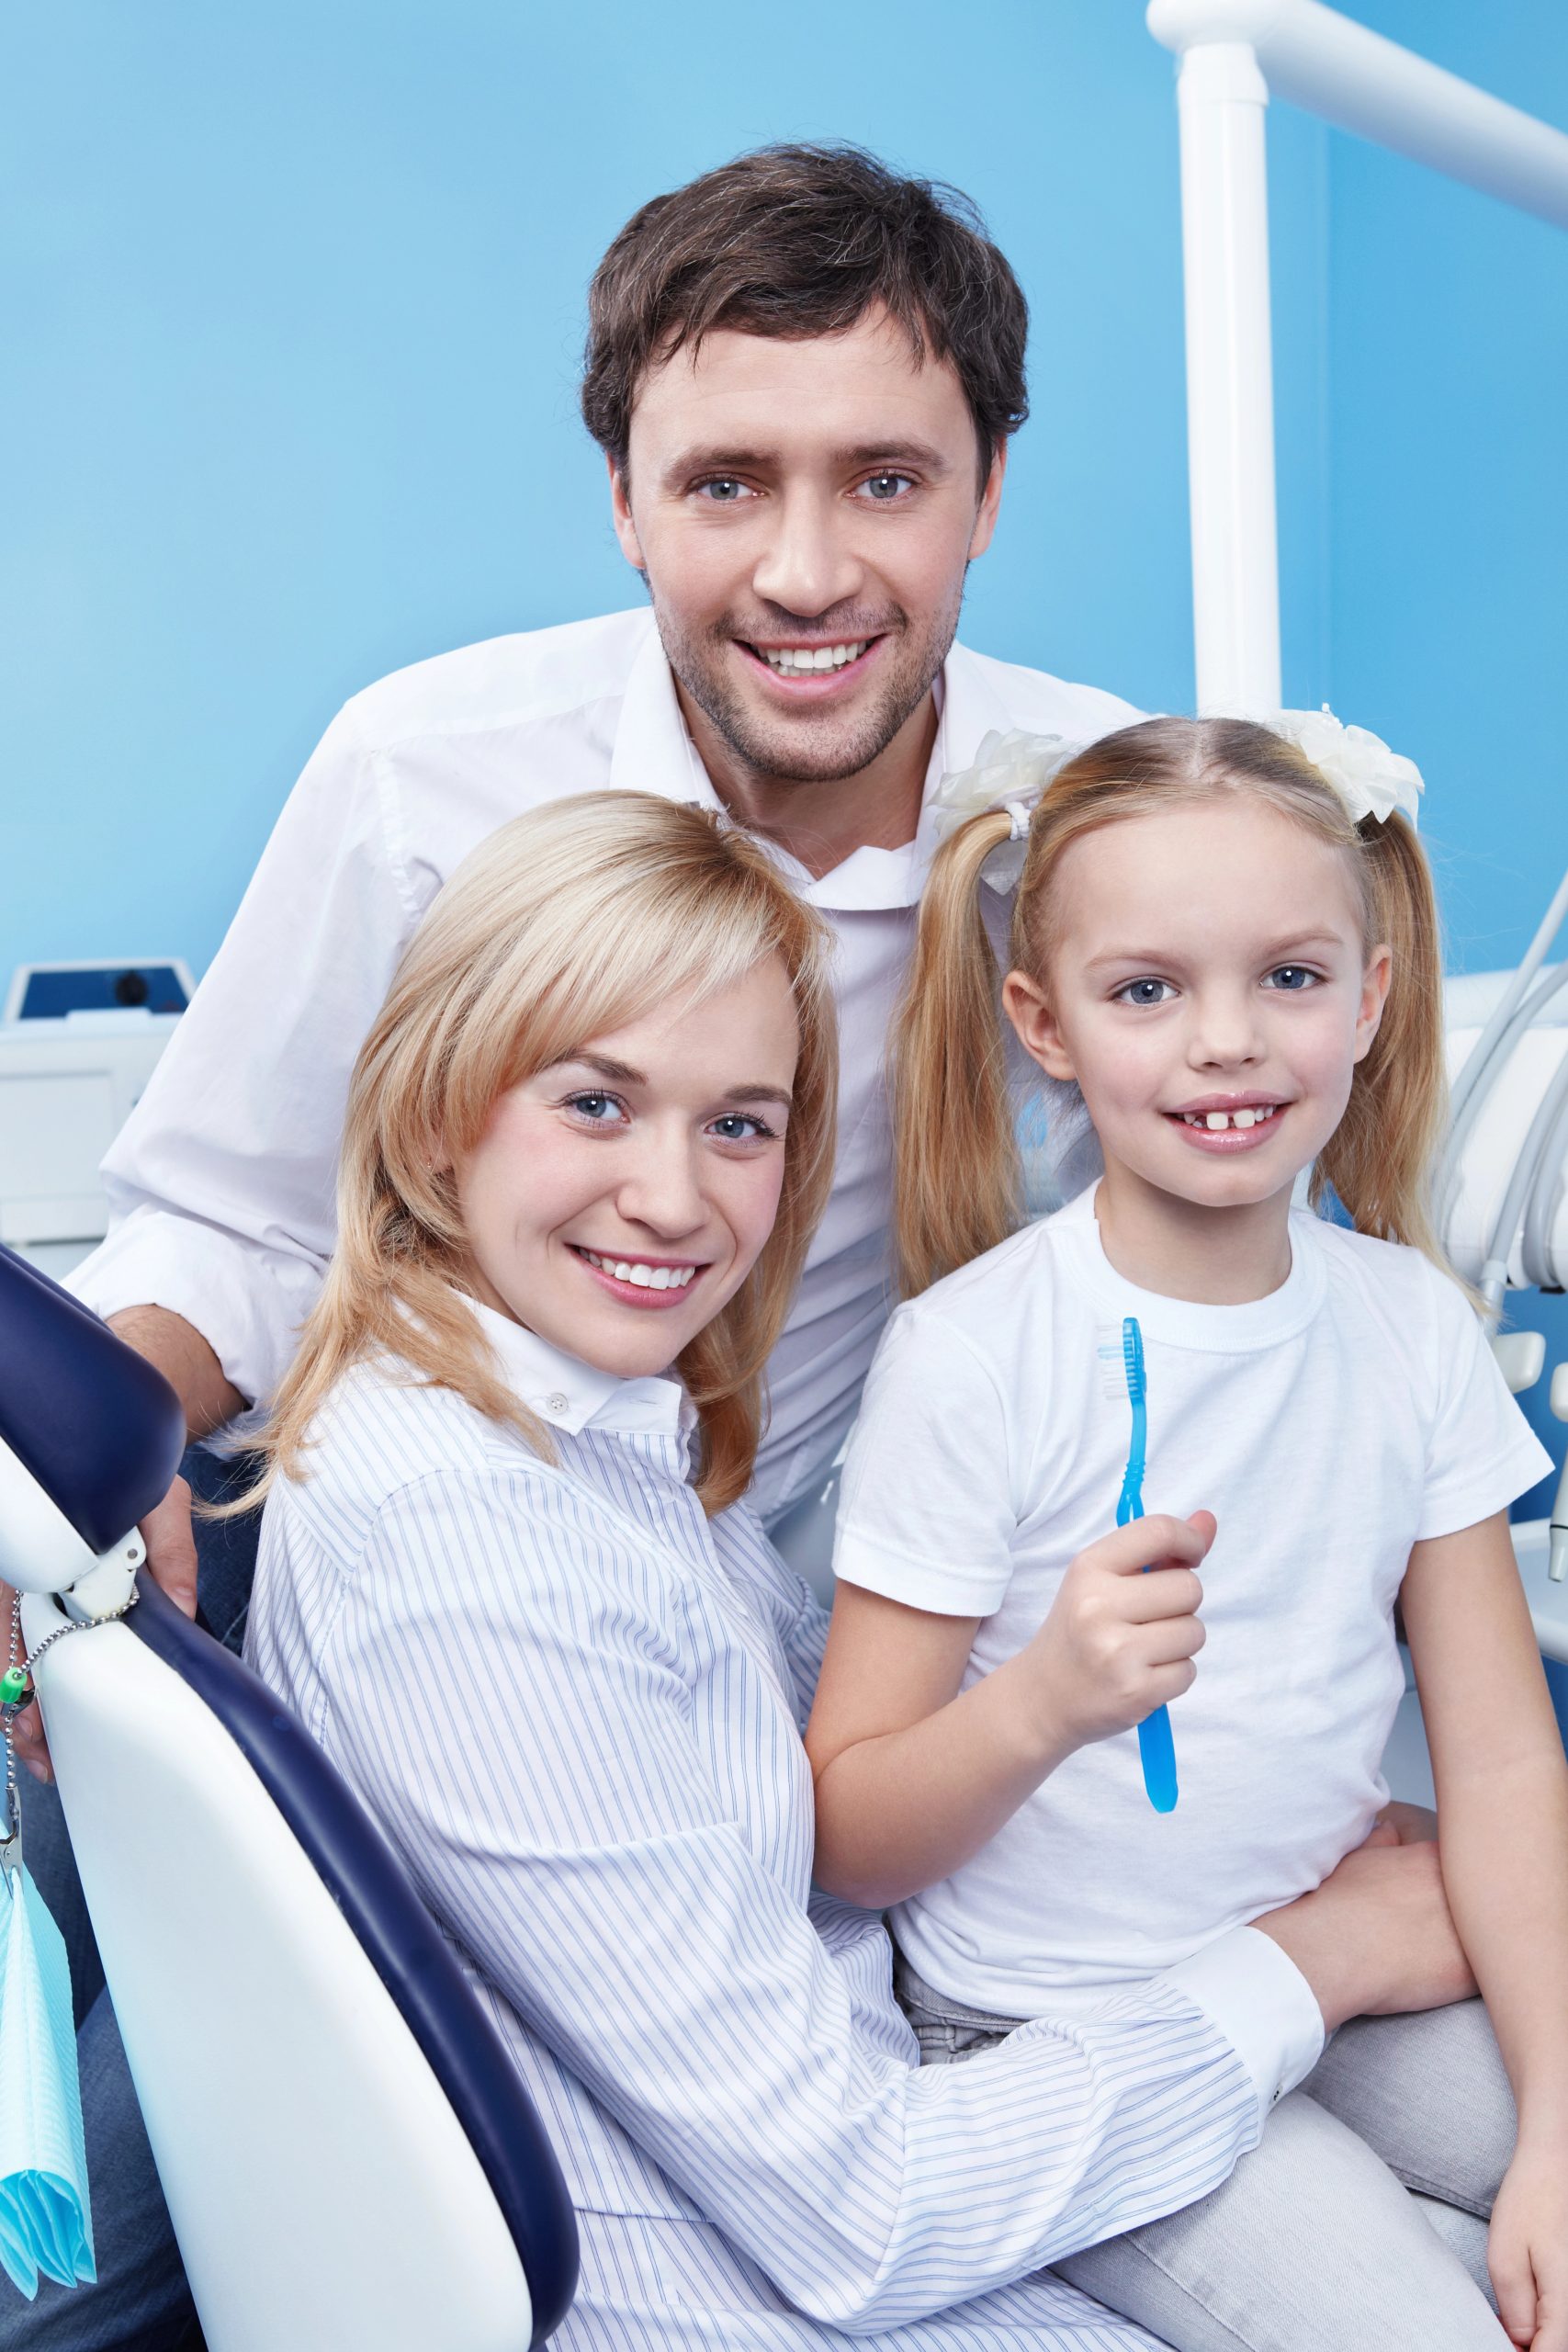 Kids’ Dental Cleanings: Making First Visits Fun